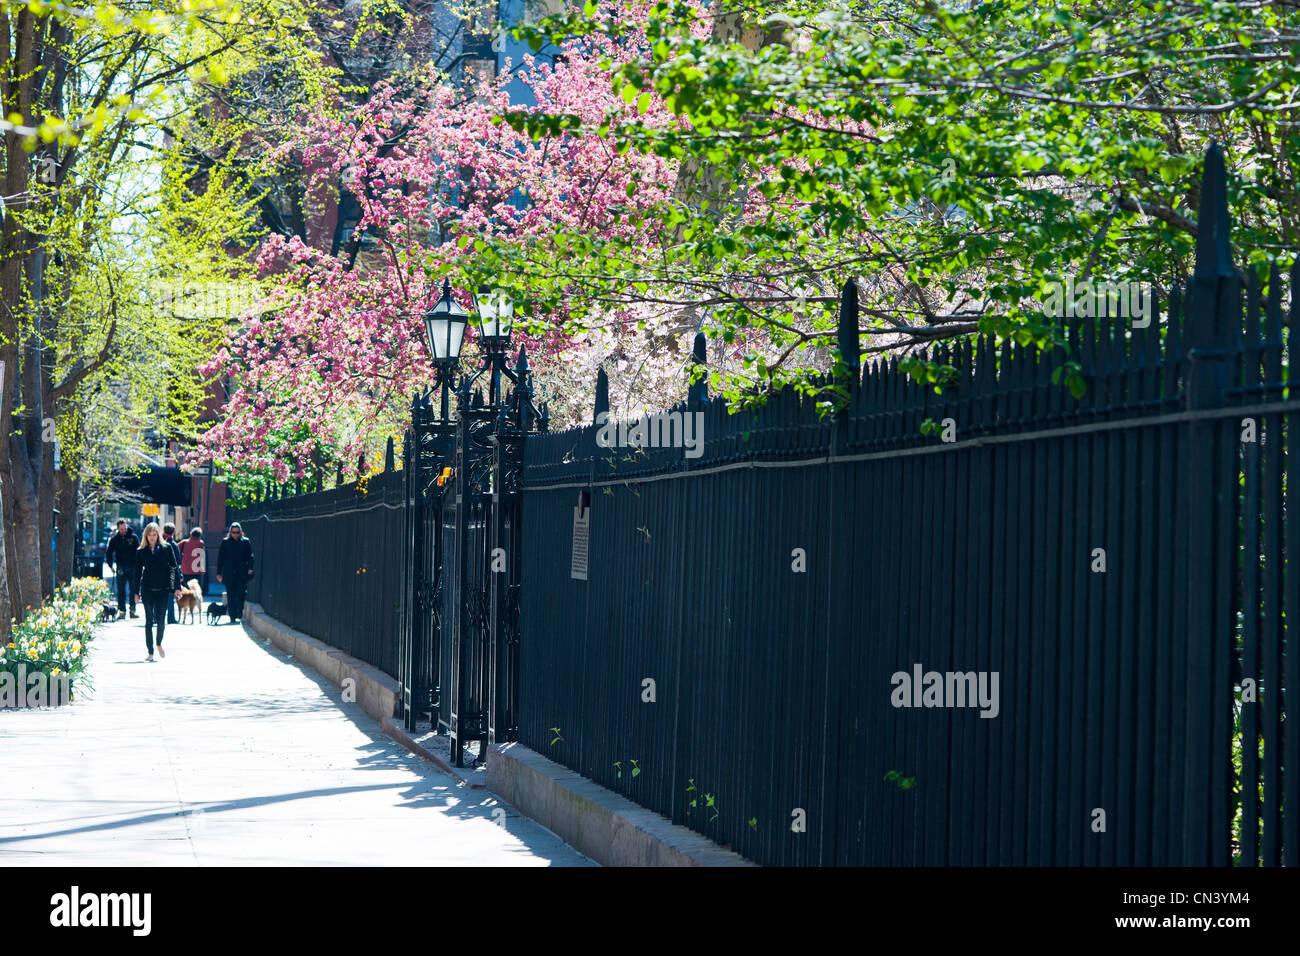 Scenes in and around the Gramercy Park neighborhood in New York. (© Richard B. Levine) Stock Photo